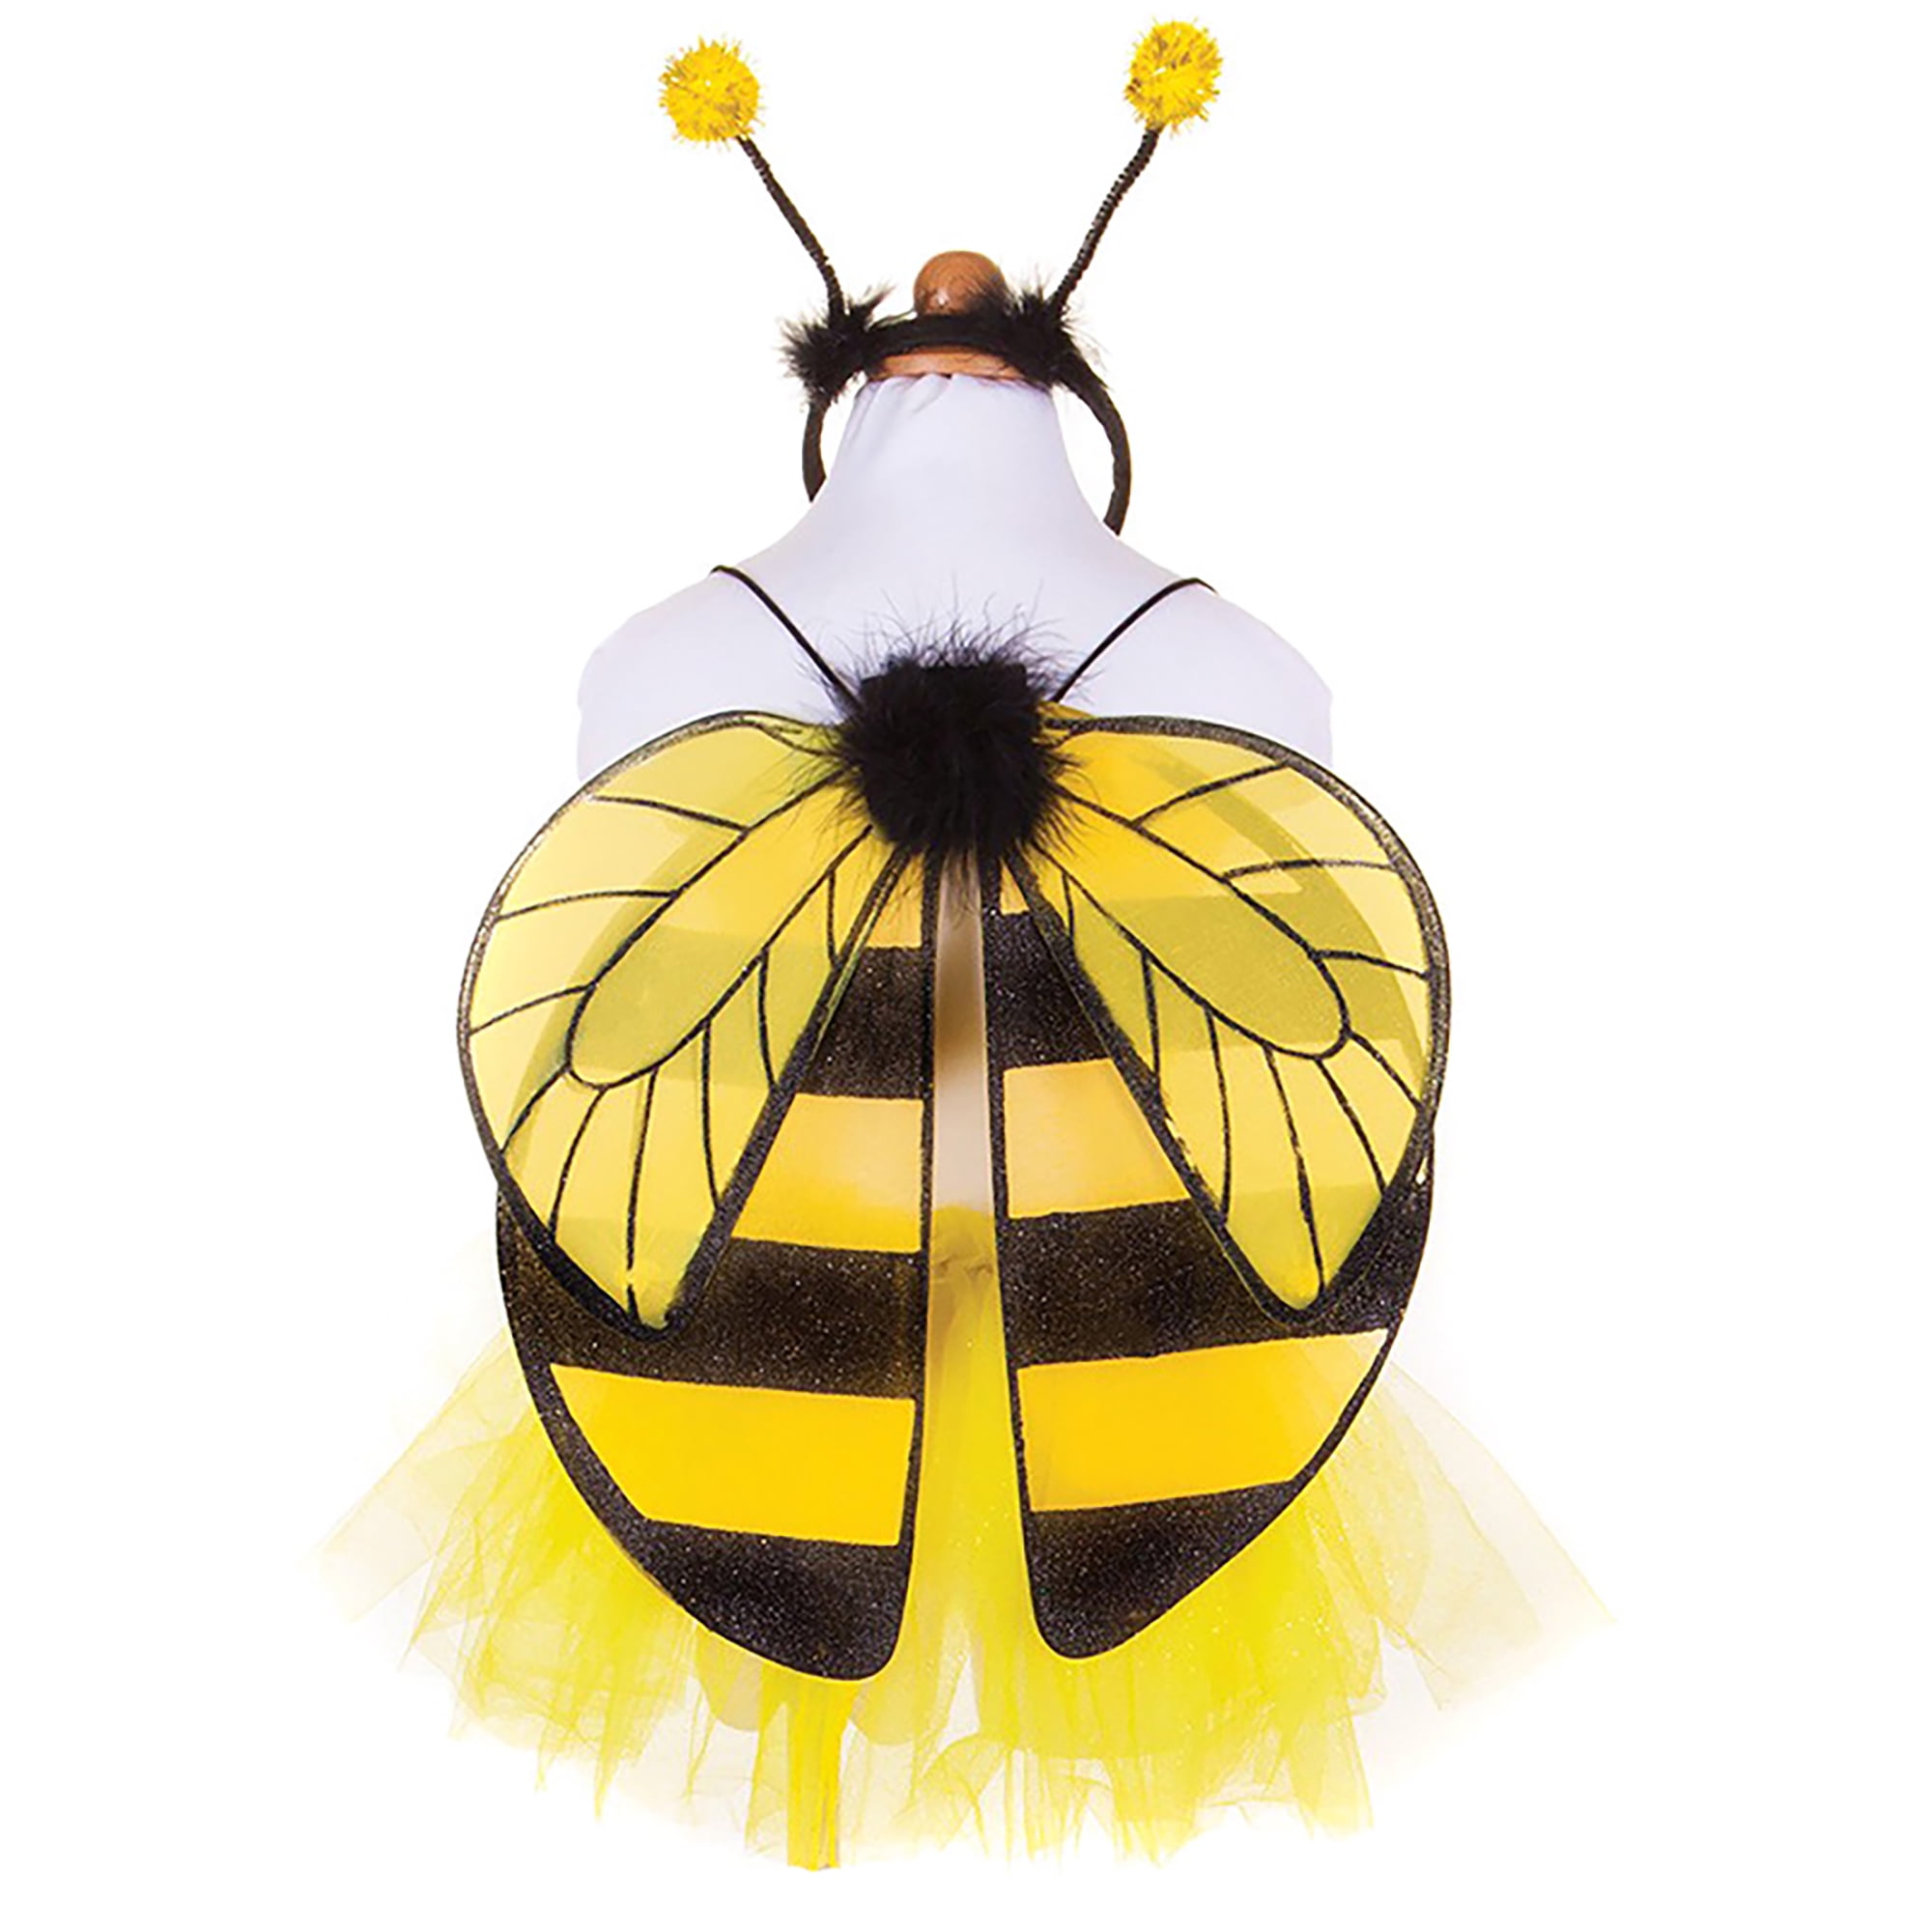 Forum Child Bumble Bee Tights, Medium, Yellow/Black